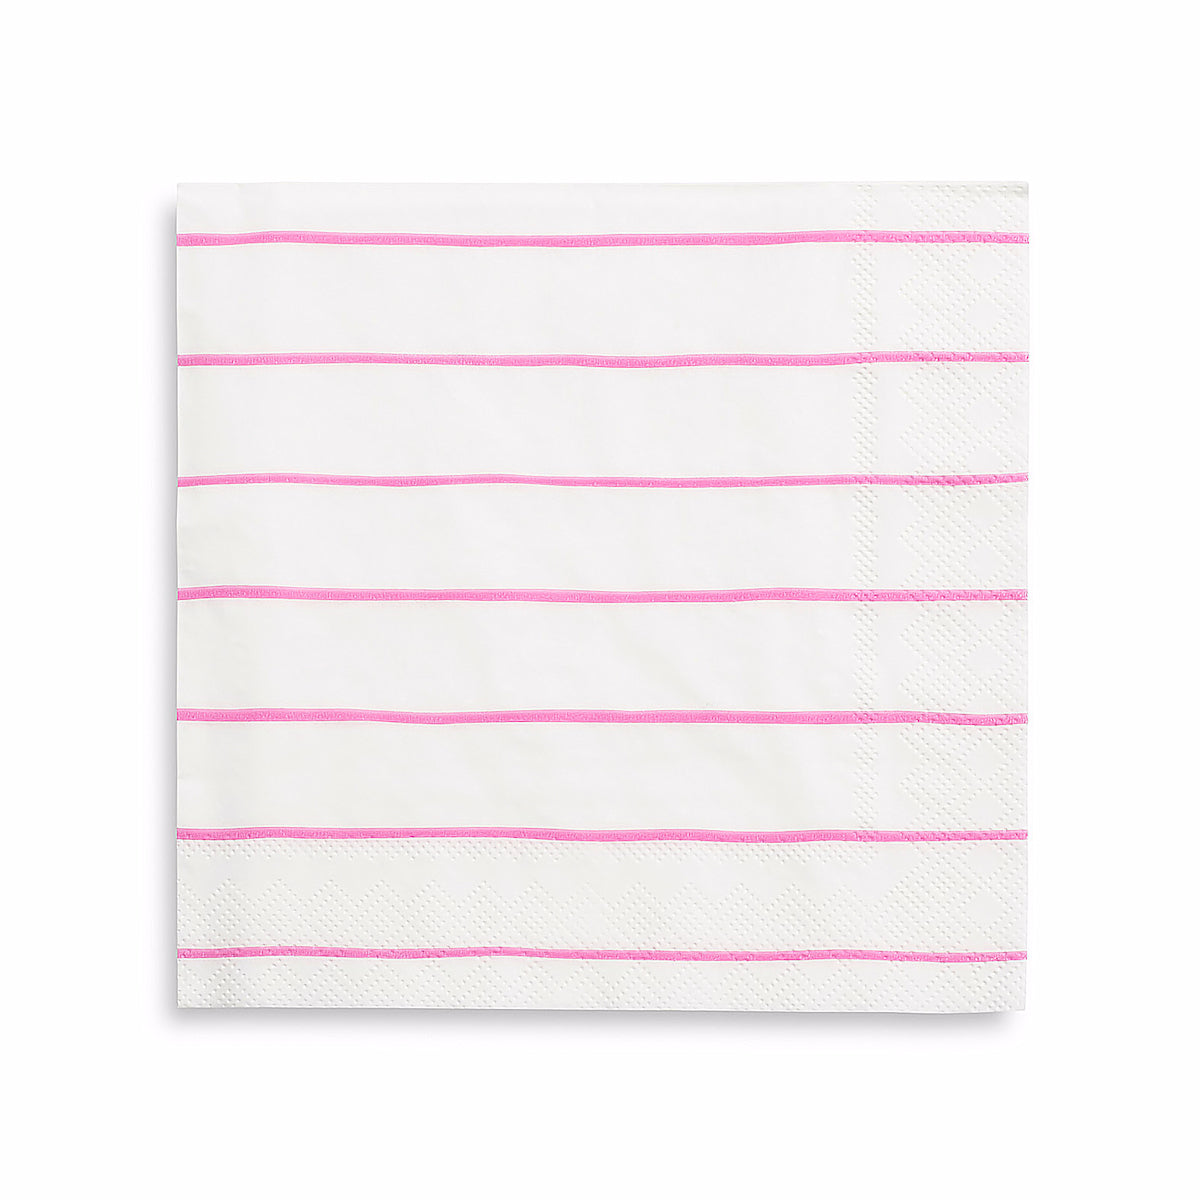 Striped Pink Napkins: Large | www.sprinklebeesweet.com